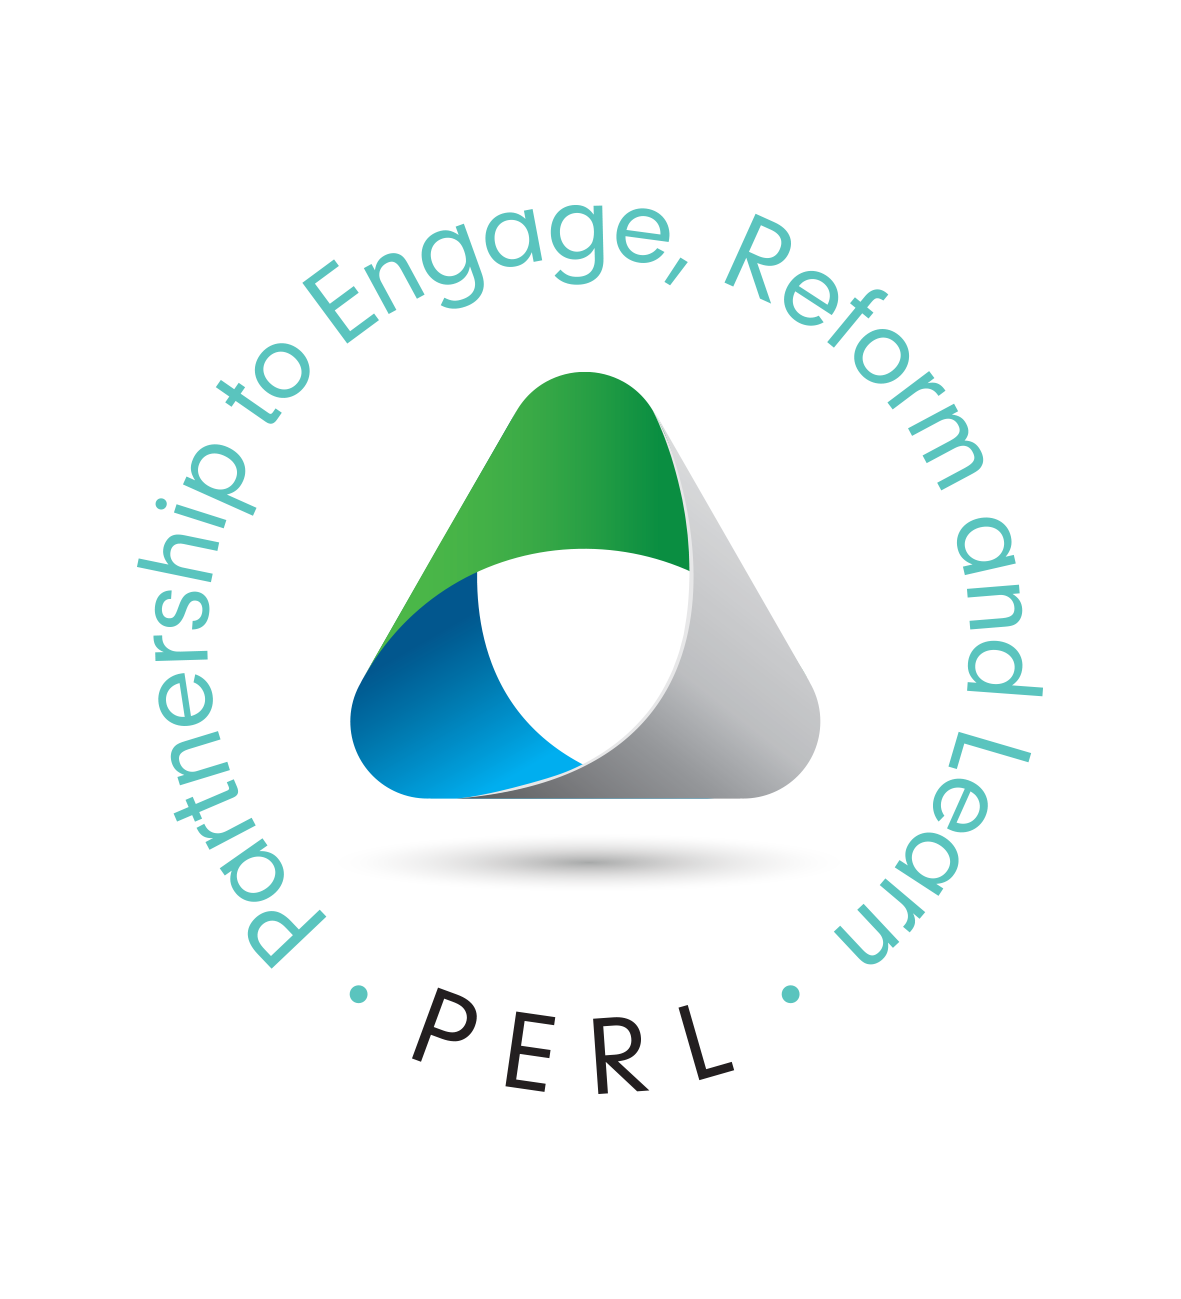 PERL logo white.png